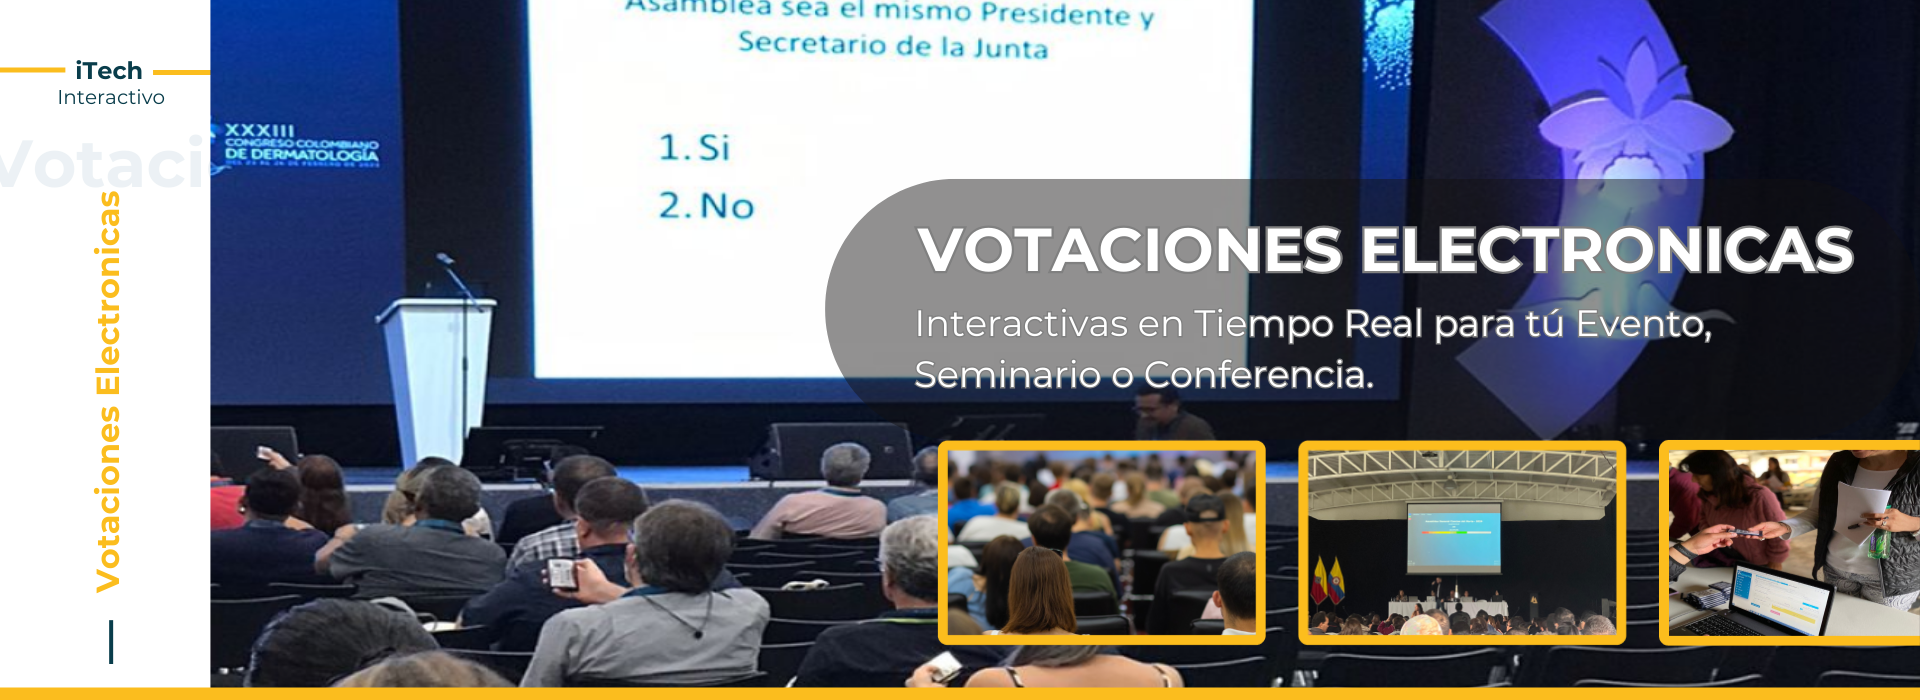 Banner Votaciones electronicas Itech